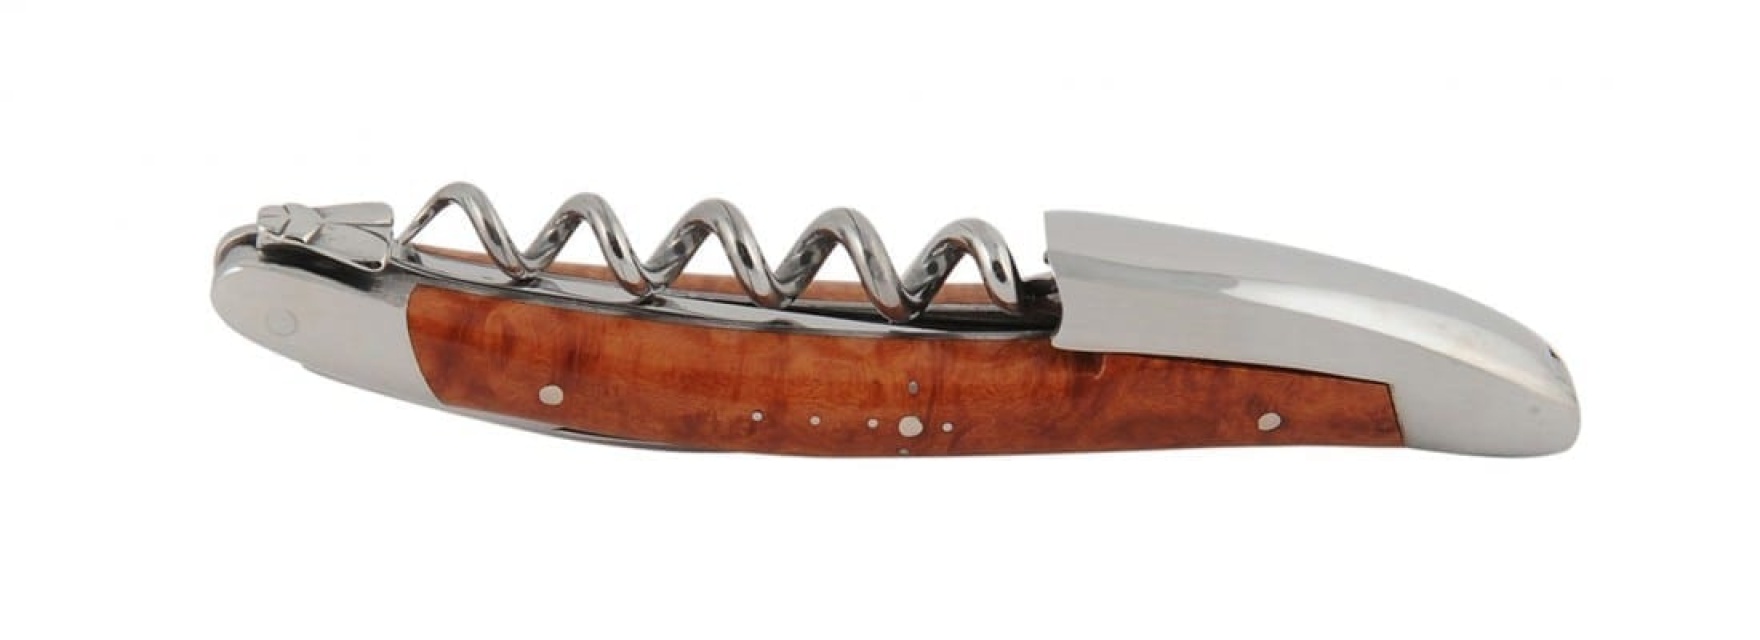 Sommelier chef's knife, tuja wooden handle